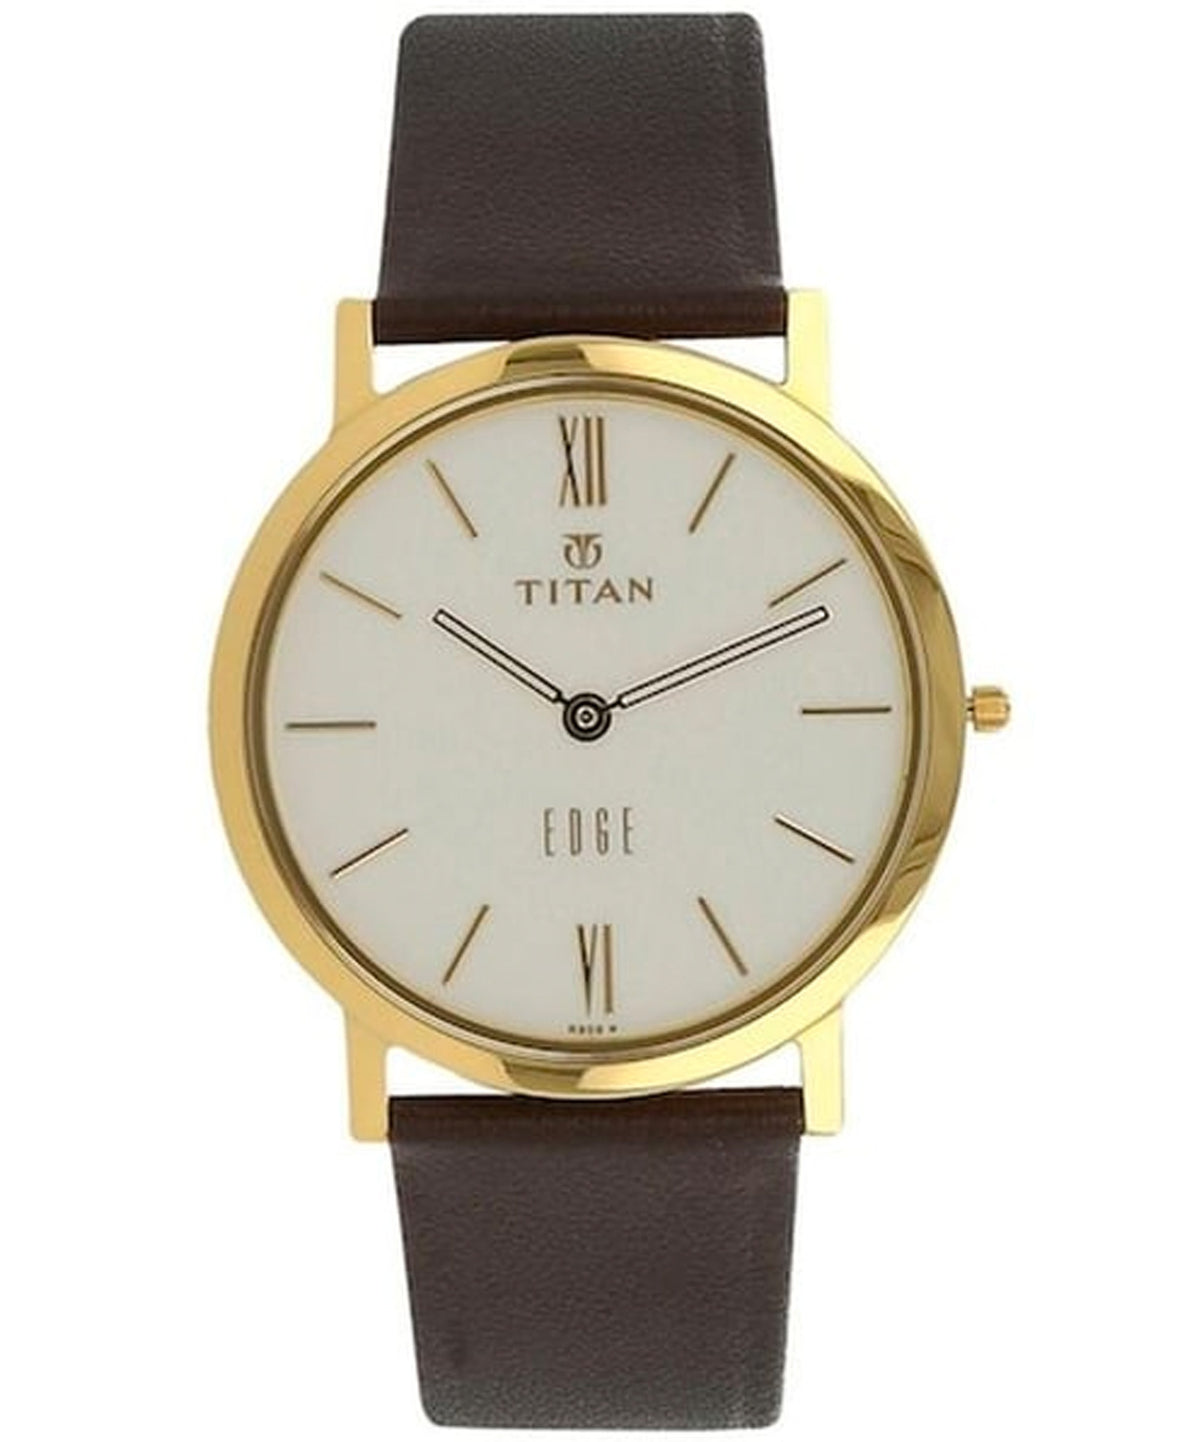 Titan Men's Watch Edge White Dial Brown Leather Strap Watch, 679YL01